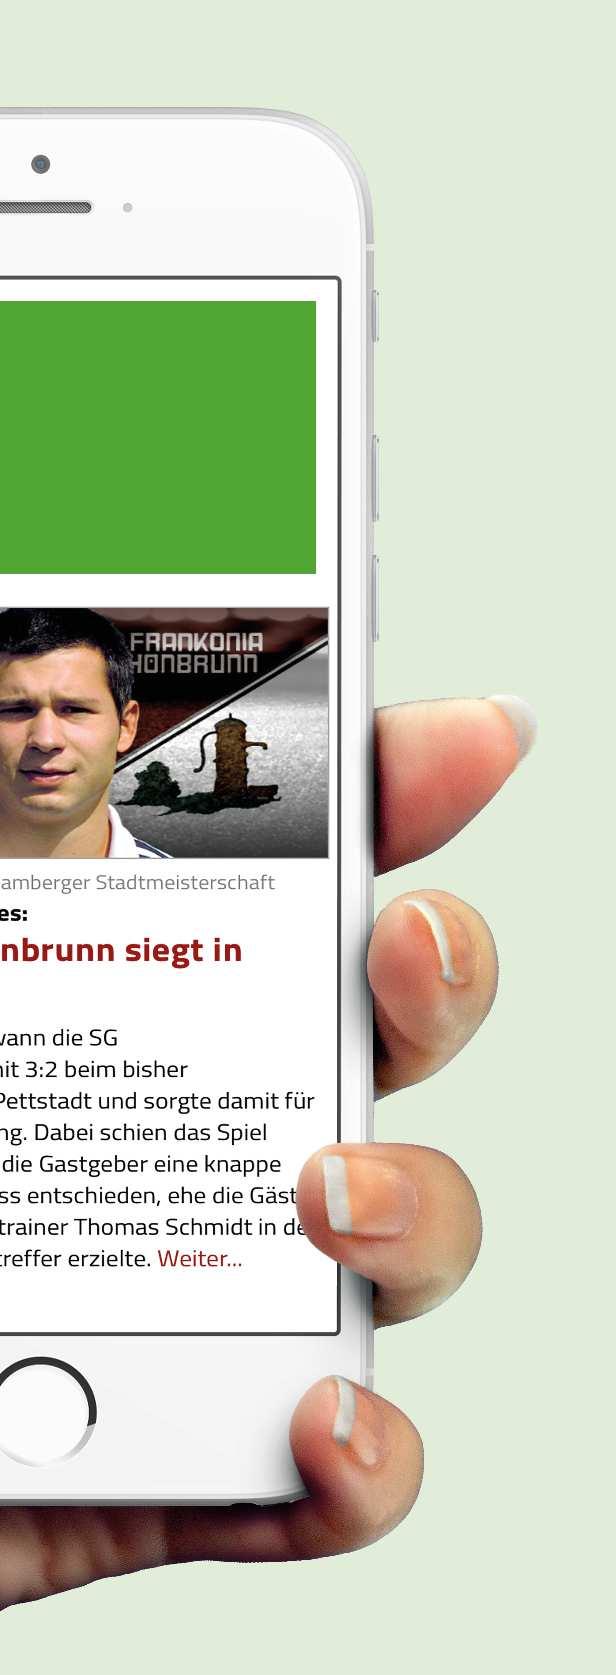 Schweinfurt Würzburg News monatlich Ne